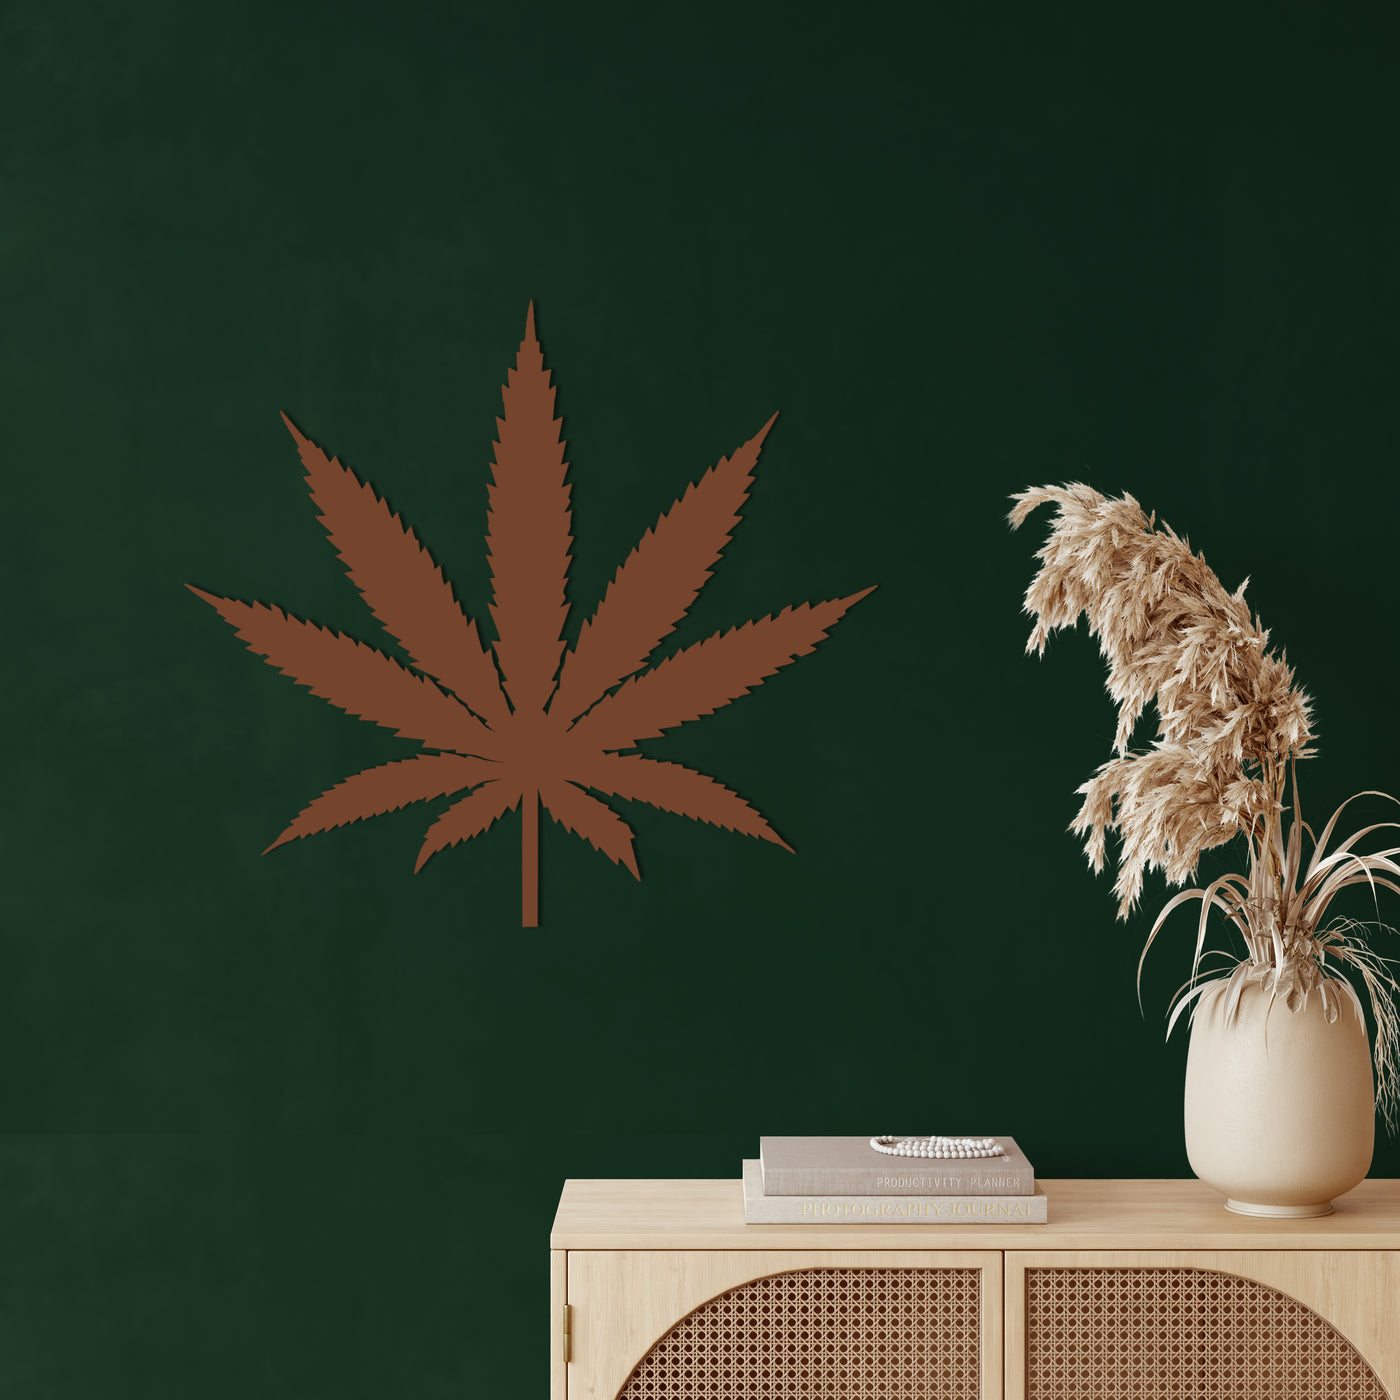 Cannabis Metall Wandkunst